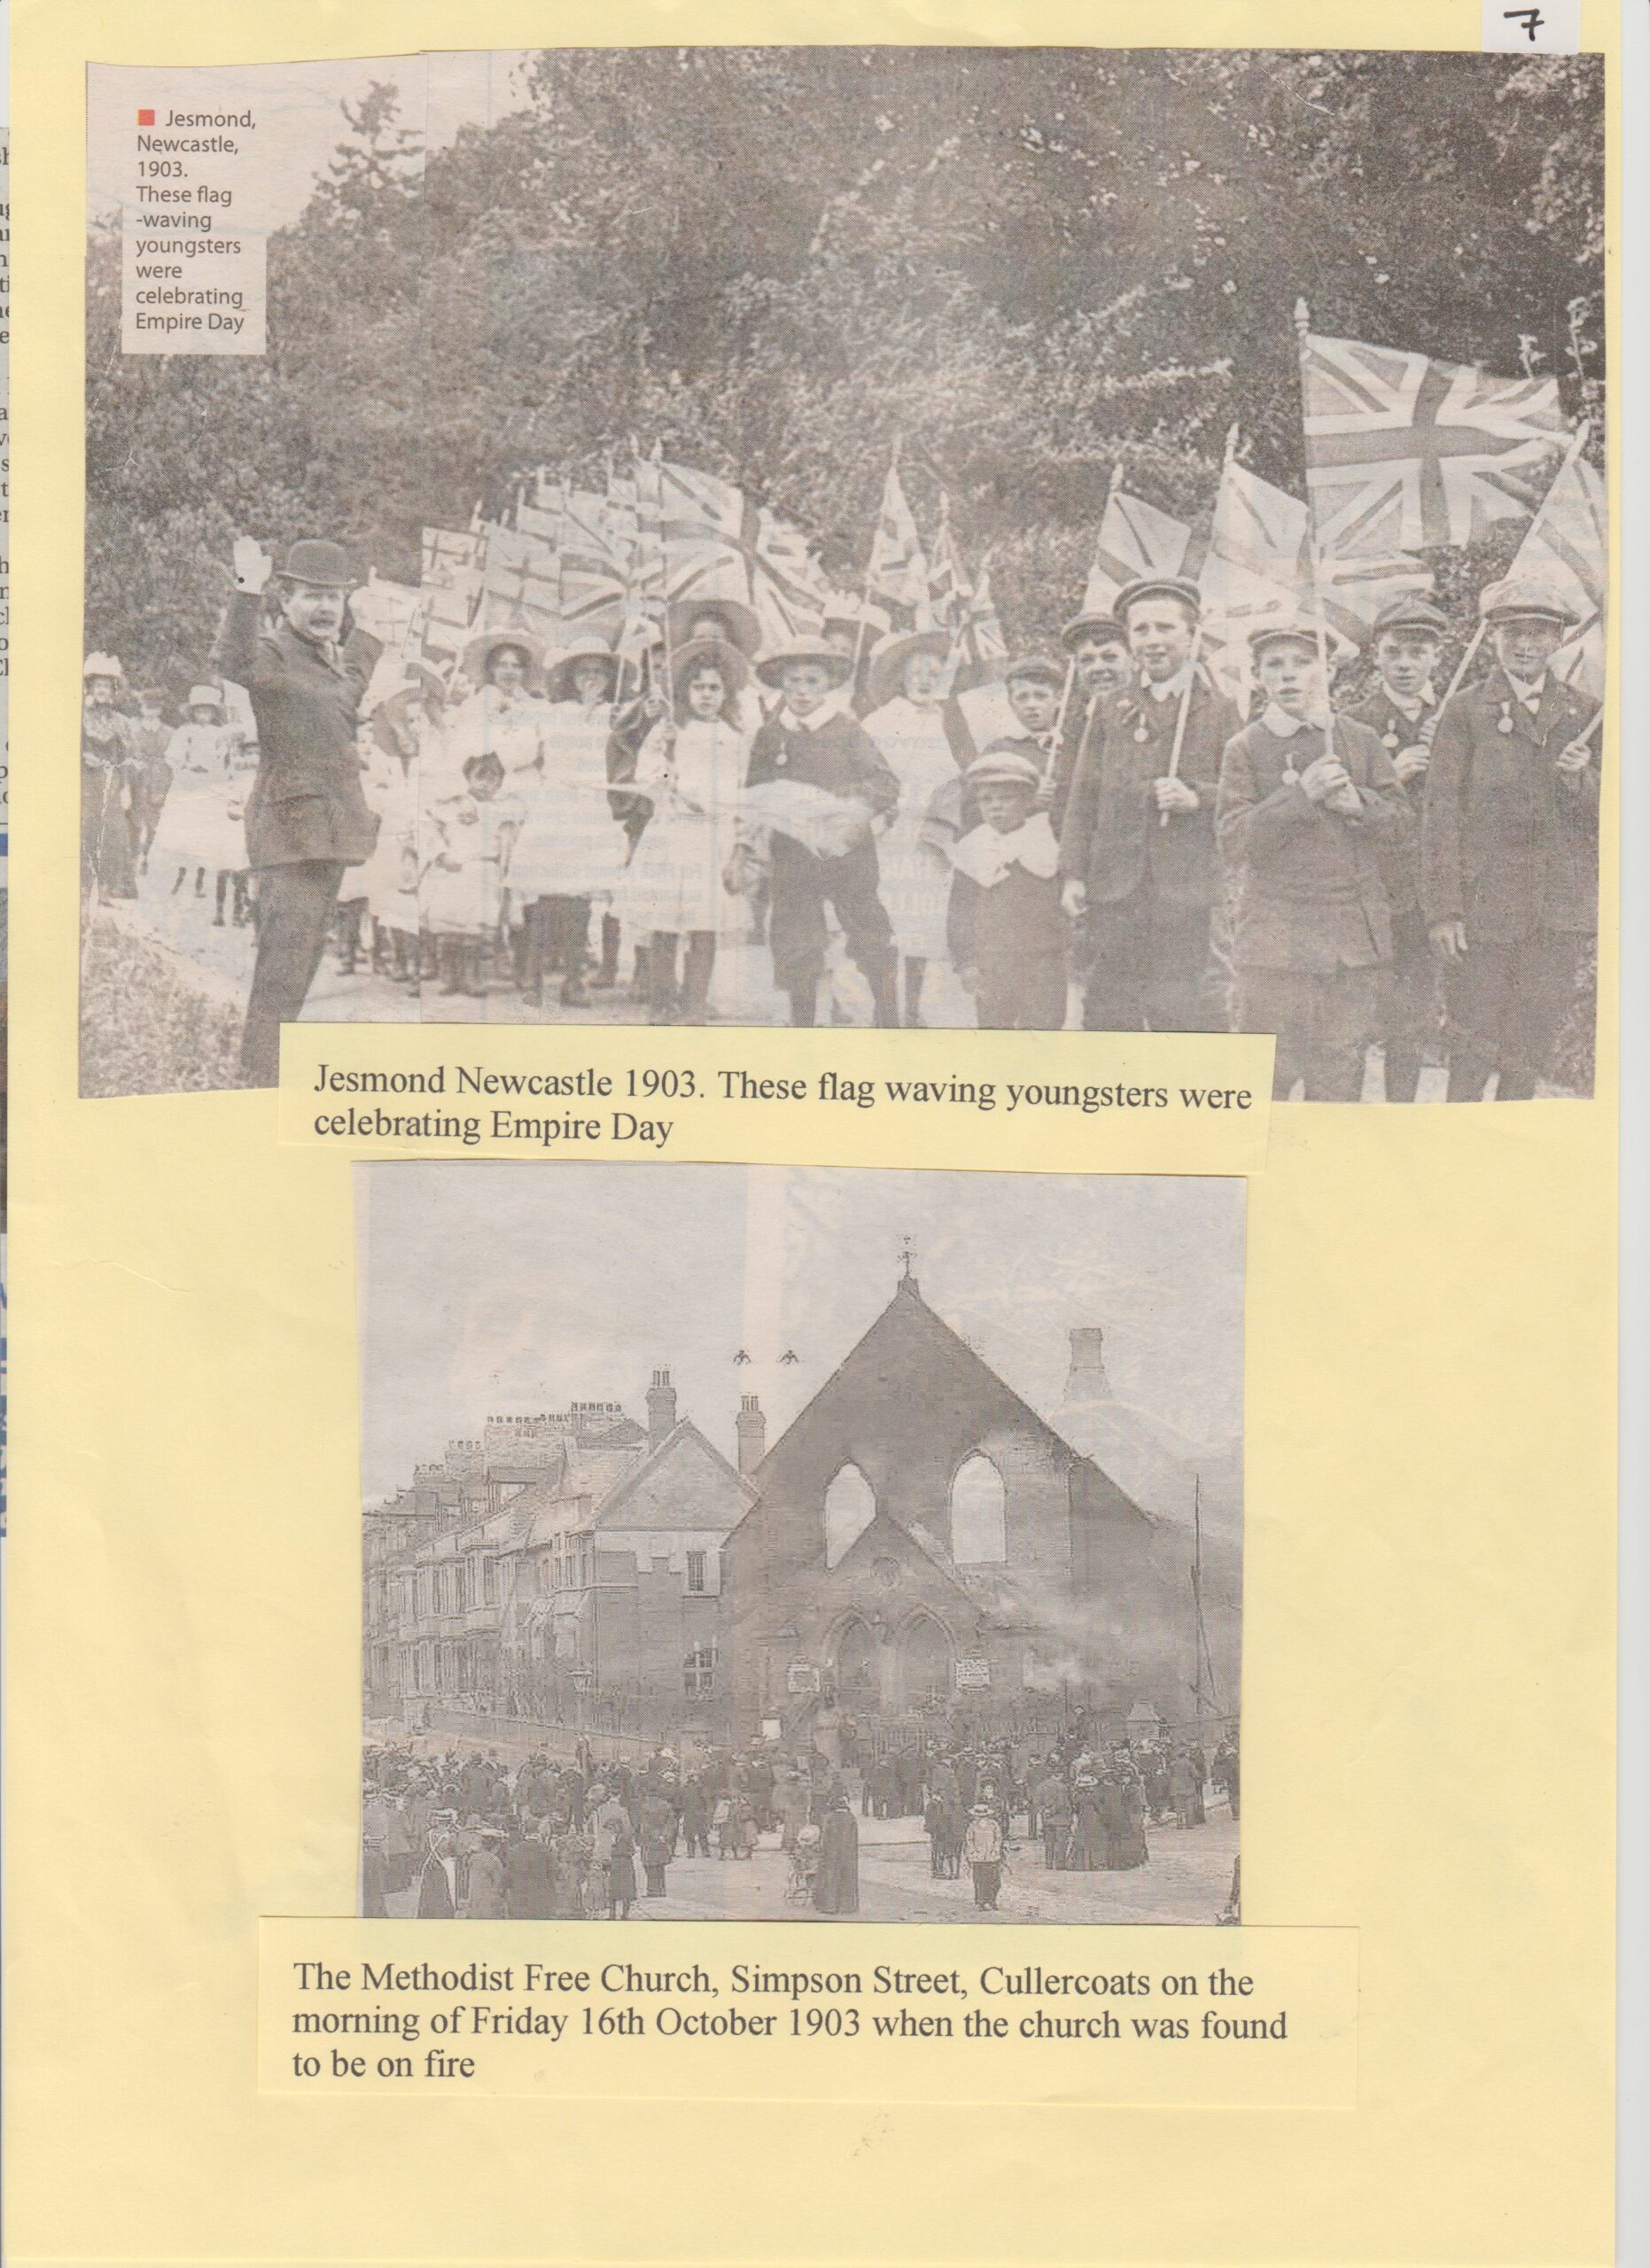 Method Free Church Cullercoats _ Children in Jesmond celebrating Empire day in 1903